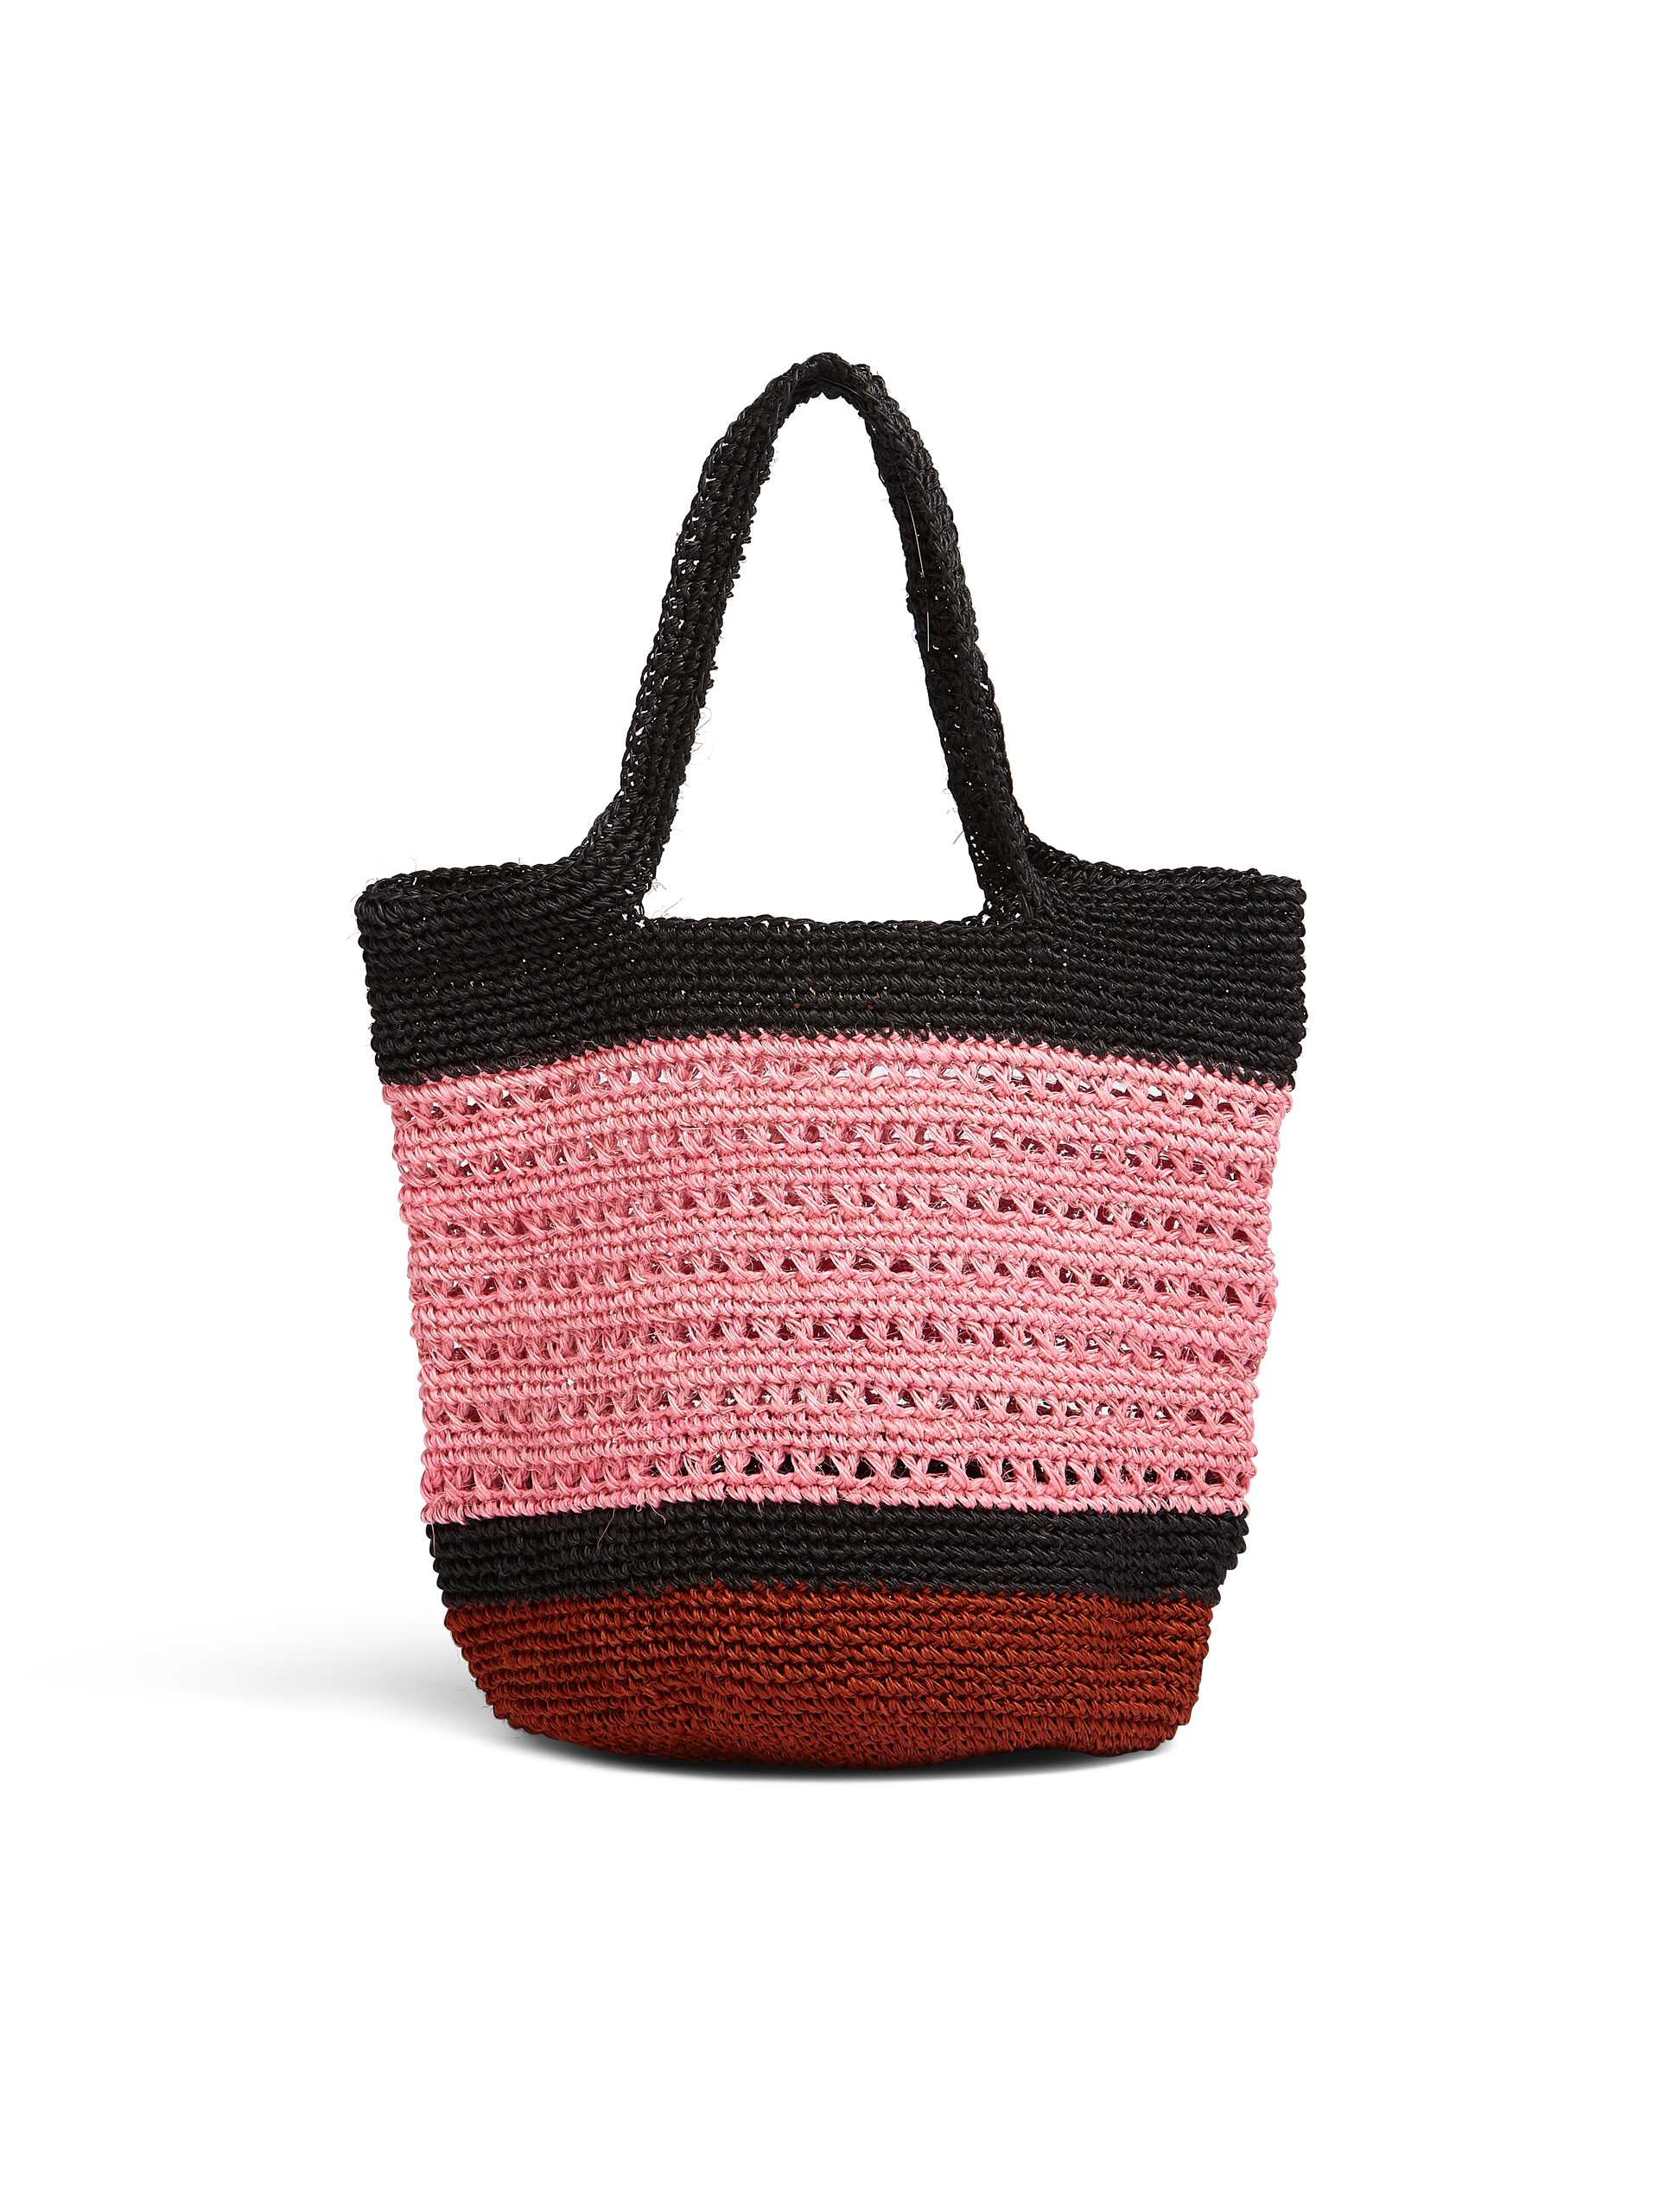 MARNI MARKET bag in pink and black natural fiber - Bags - Image 3